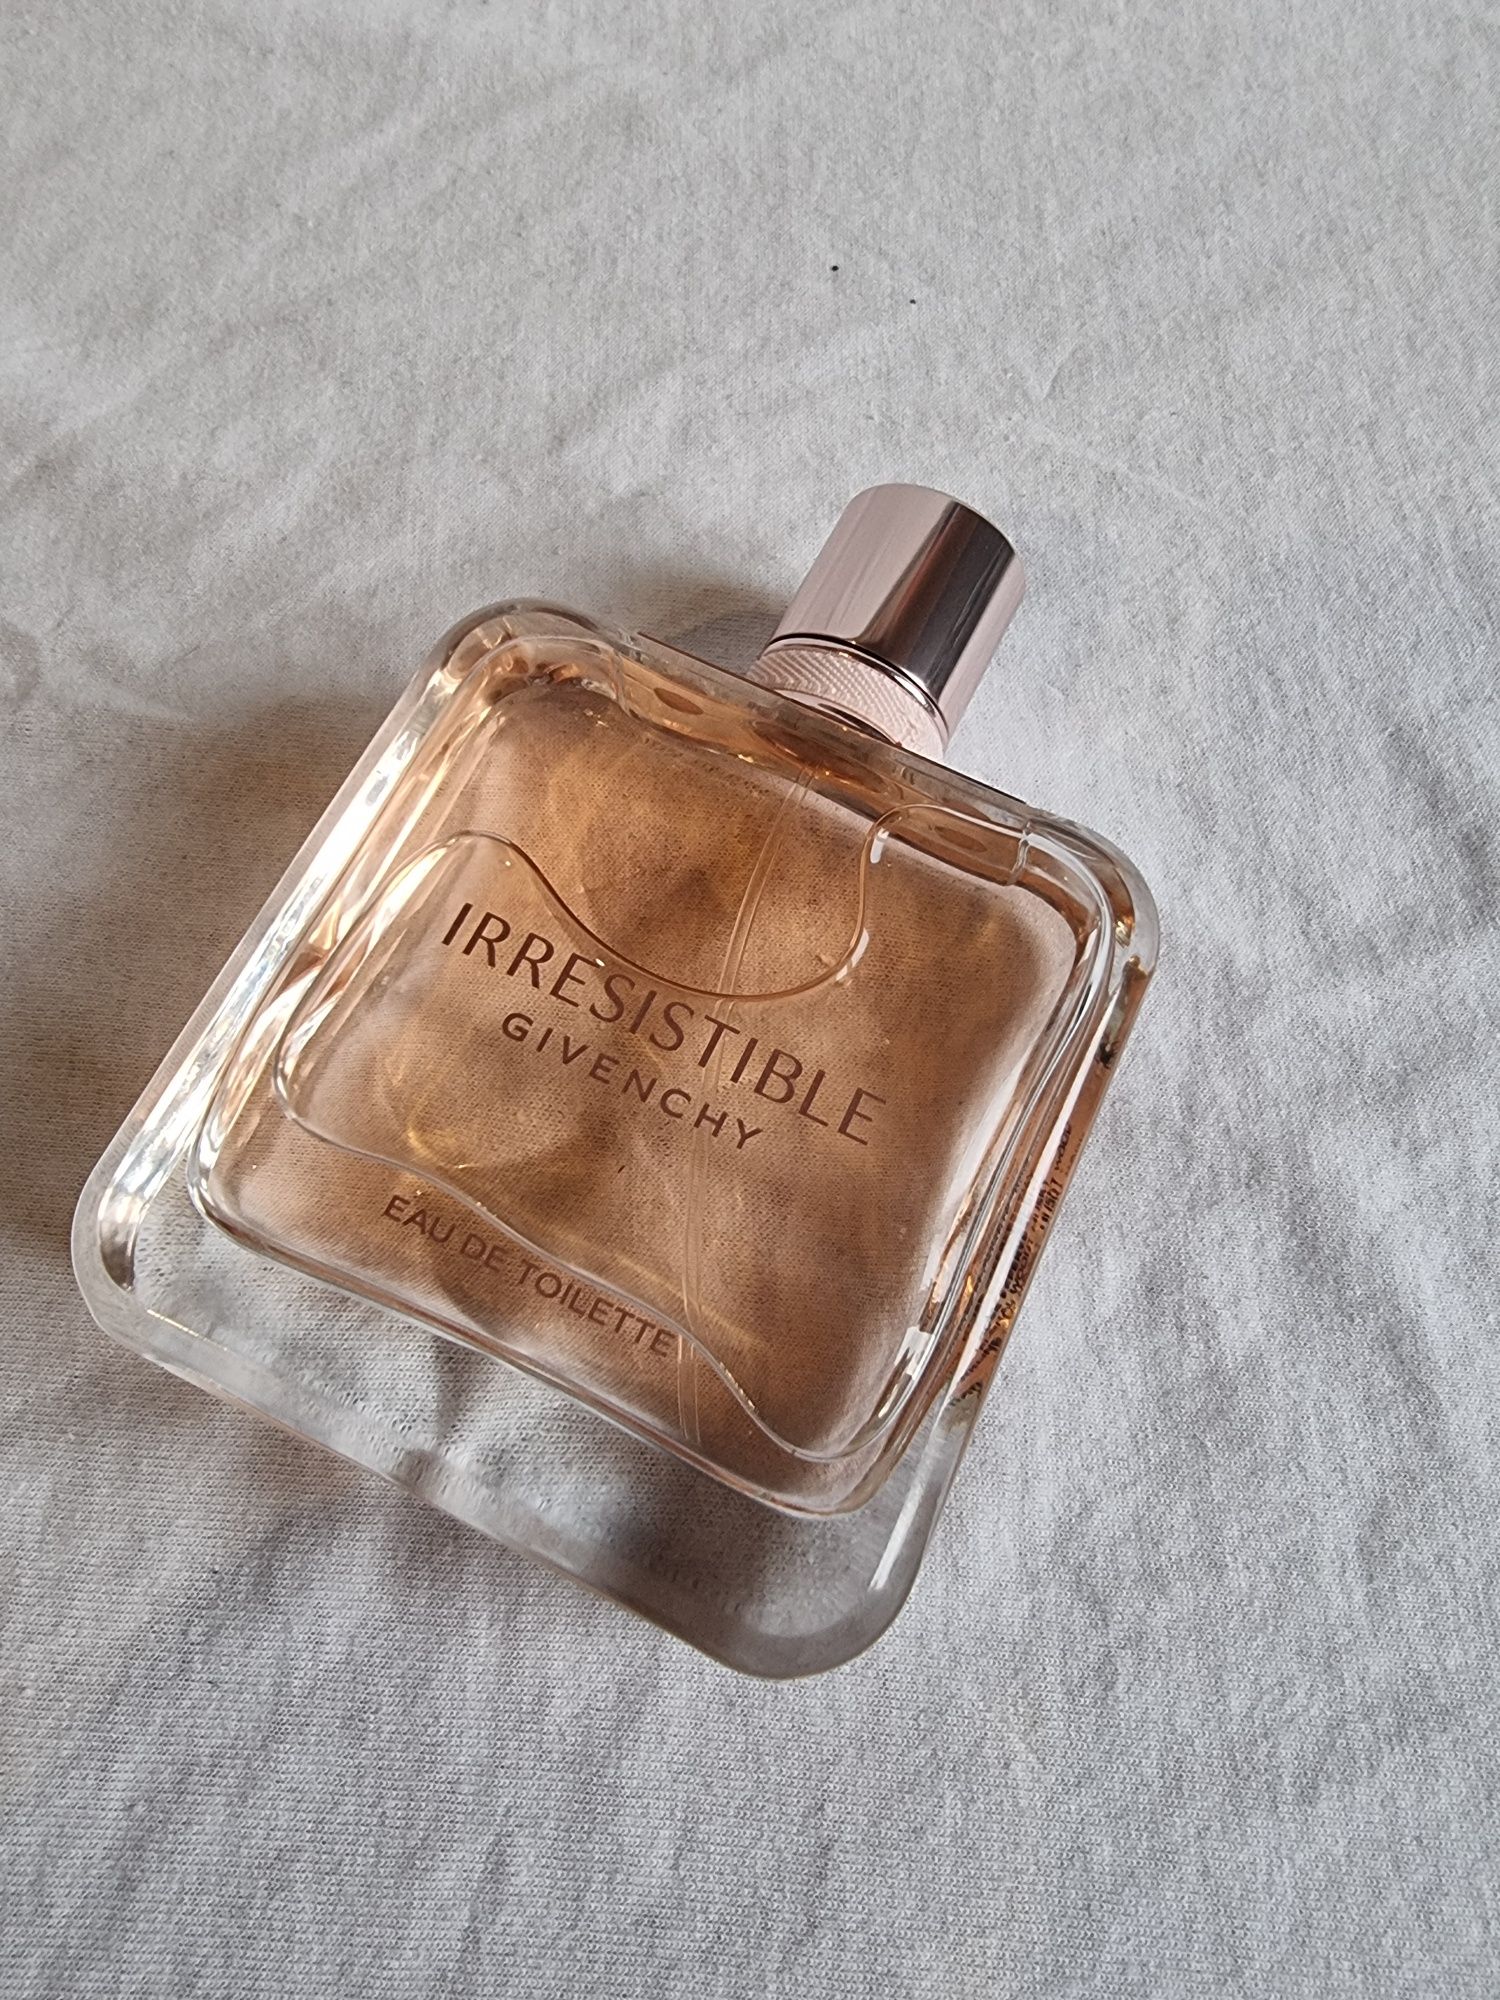 Givenchy Irresistible- парфюмированая вода 80мл, оригинал.